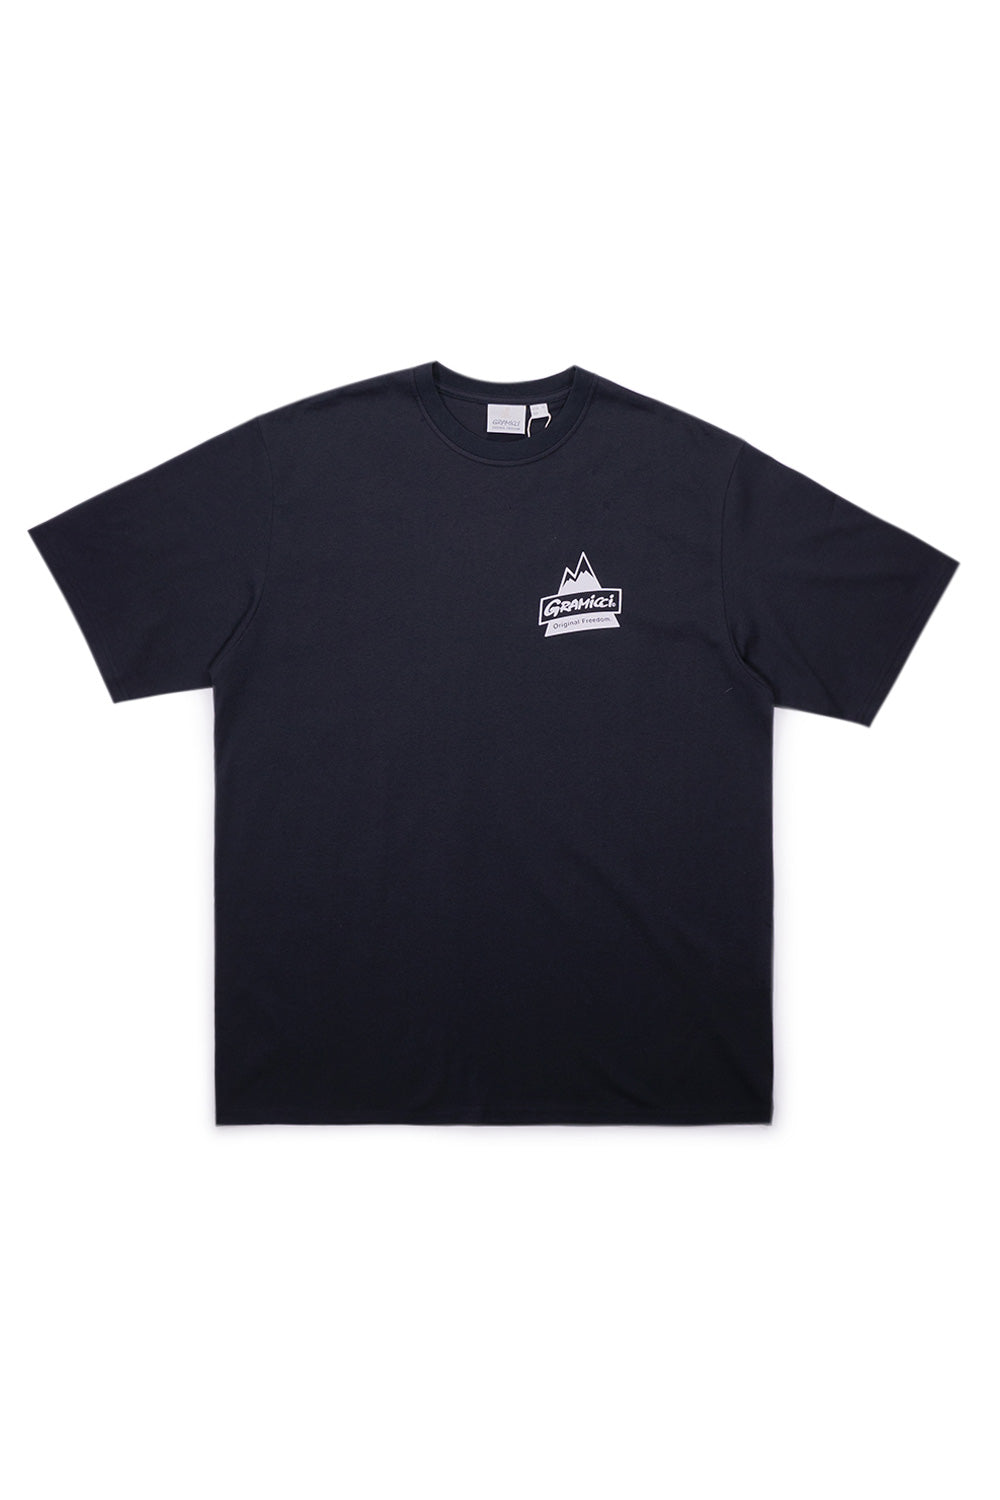 Gramicci Peak T-Shirt Vintage Black - BONKERS